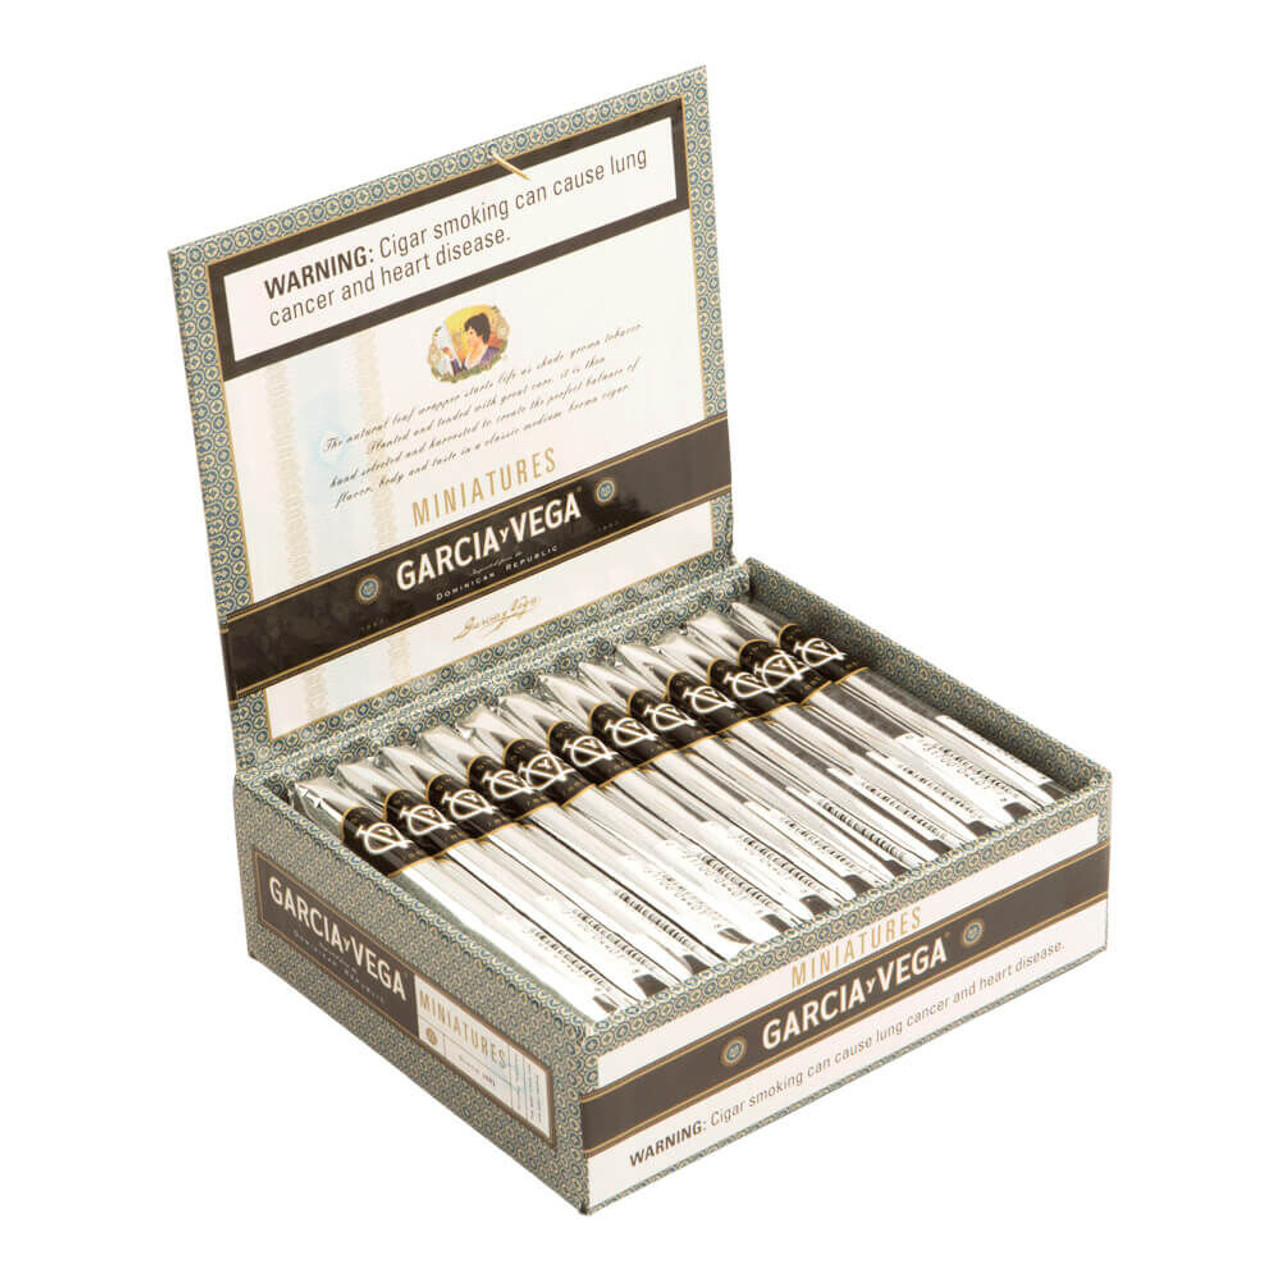 Garcia Y Vega Miniature Cigars (Box of 50) Open